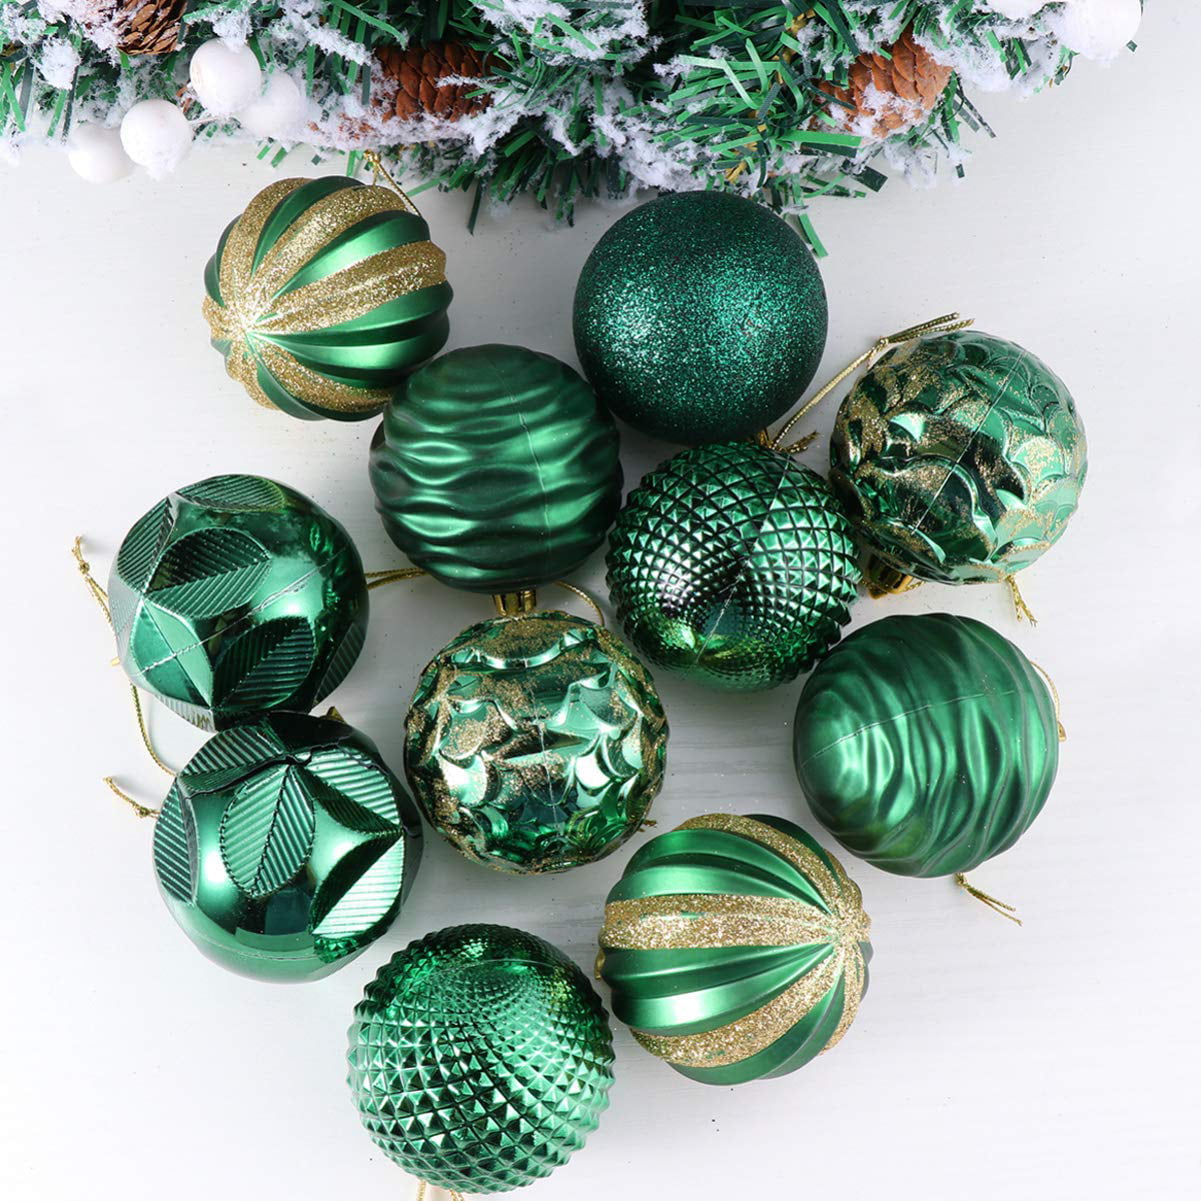 Christmas Balls Ornaments for Xmas Christmas Tree - Shatterproof